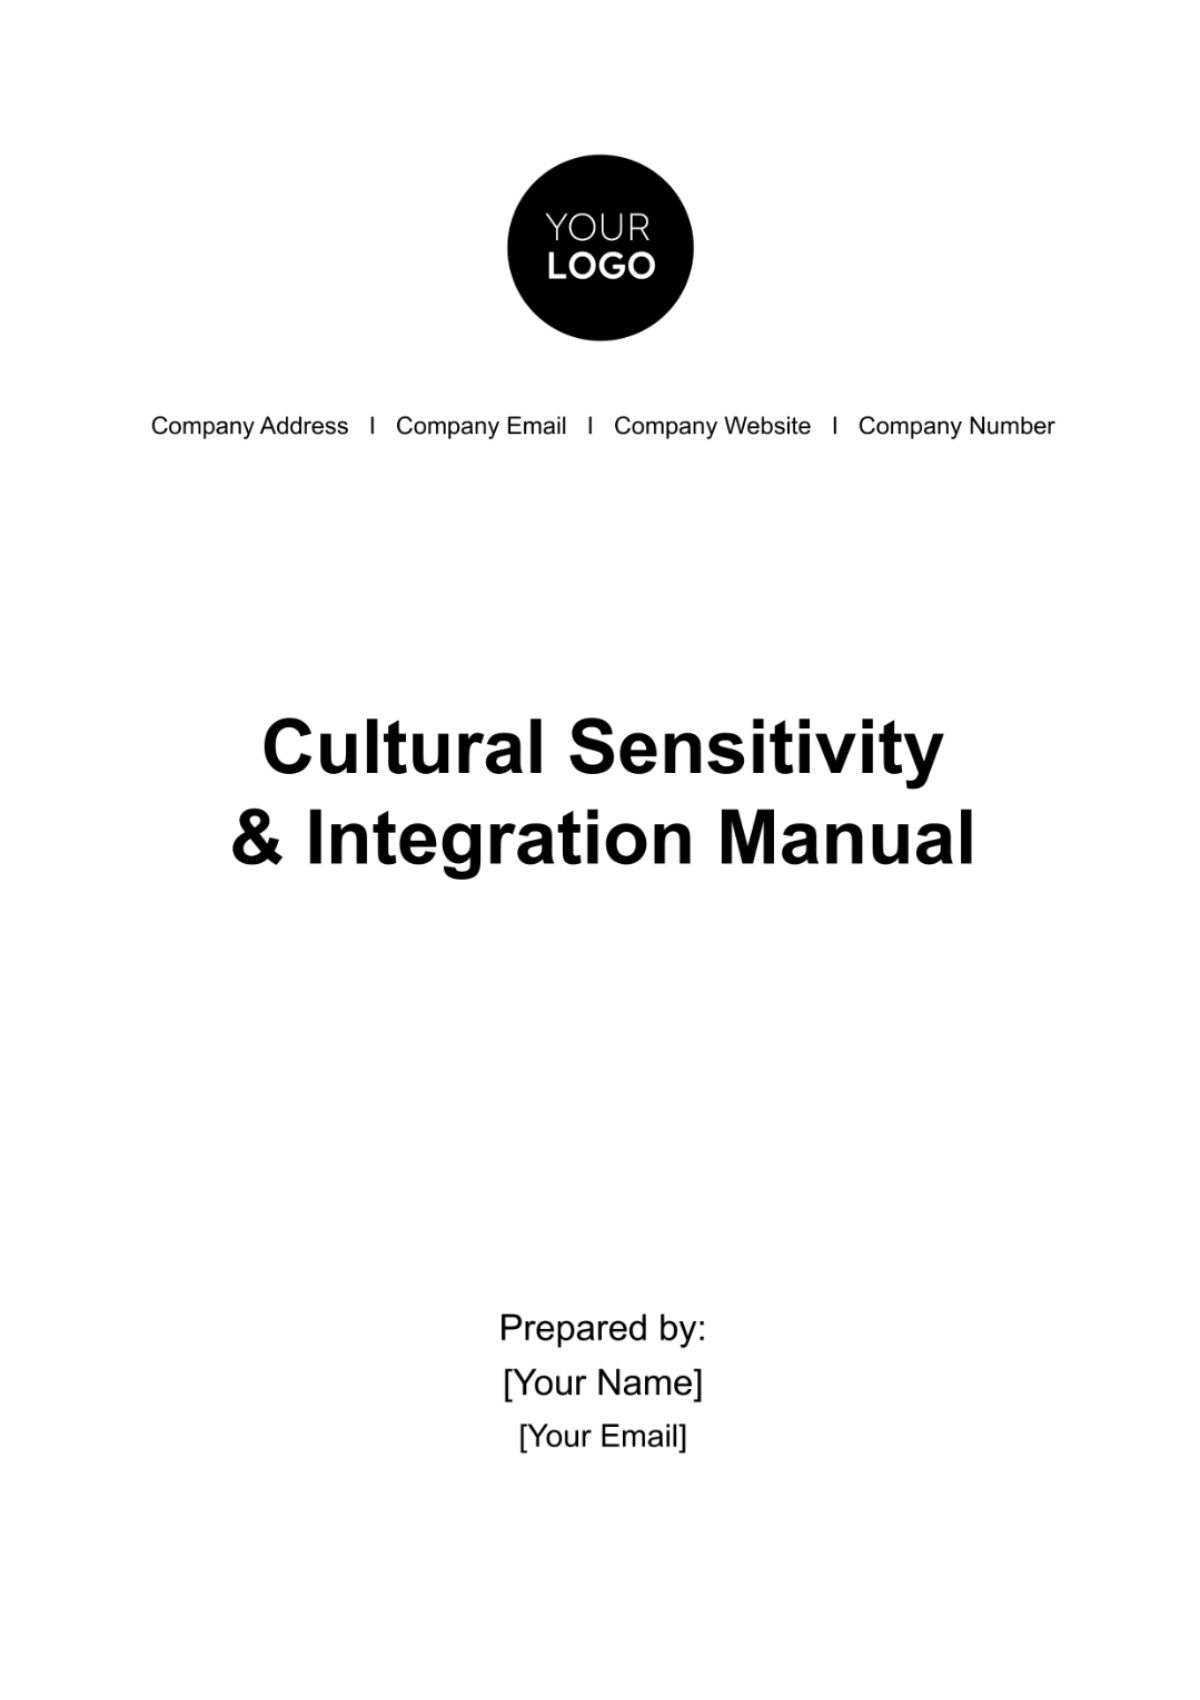 Free Cultural Sensitivity & Integration Manual HR Template